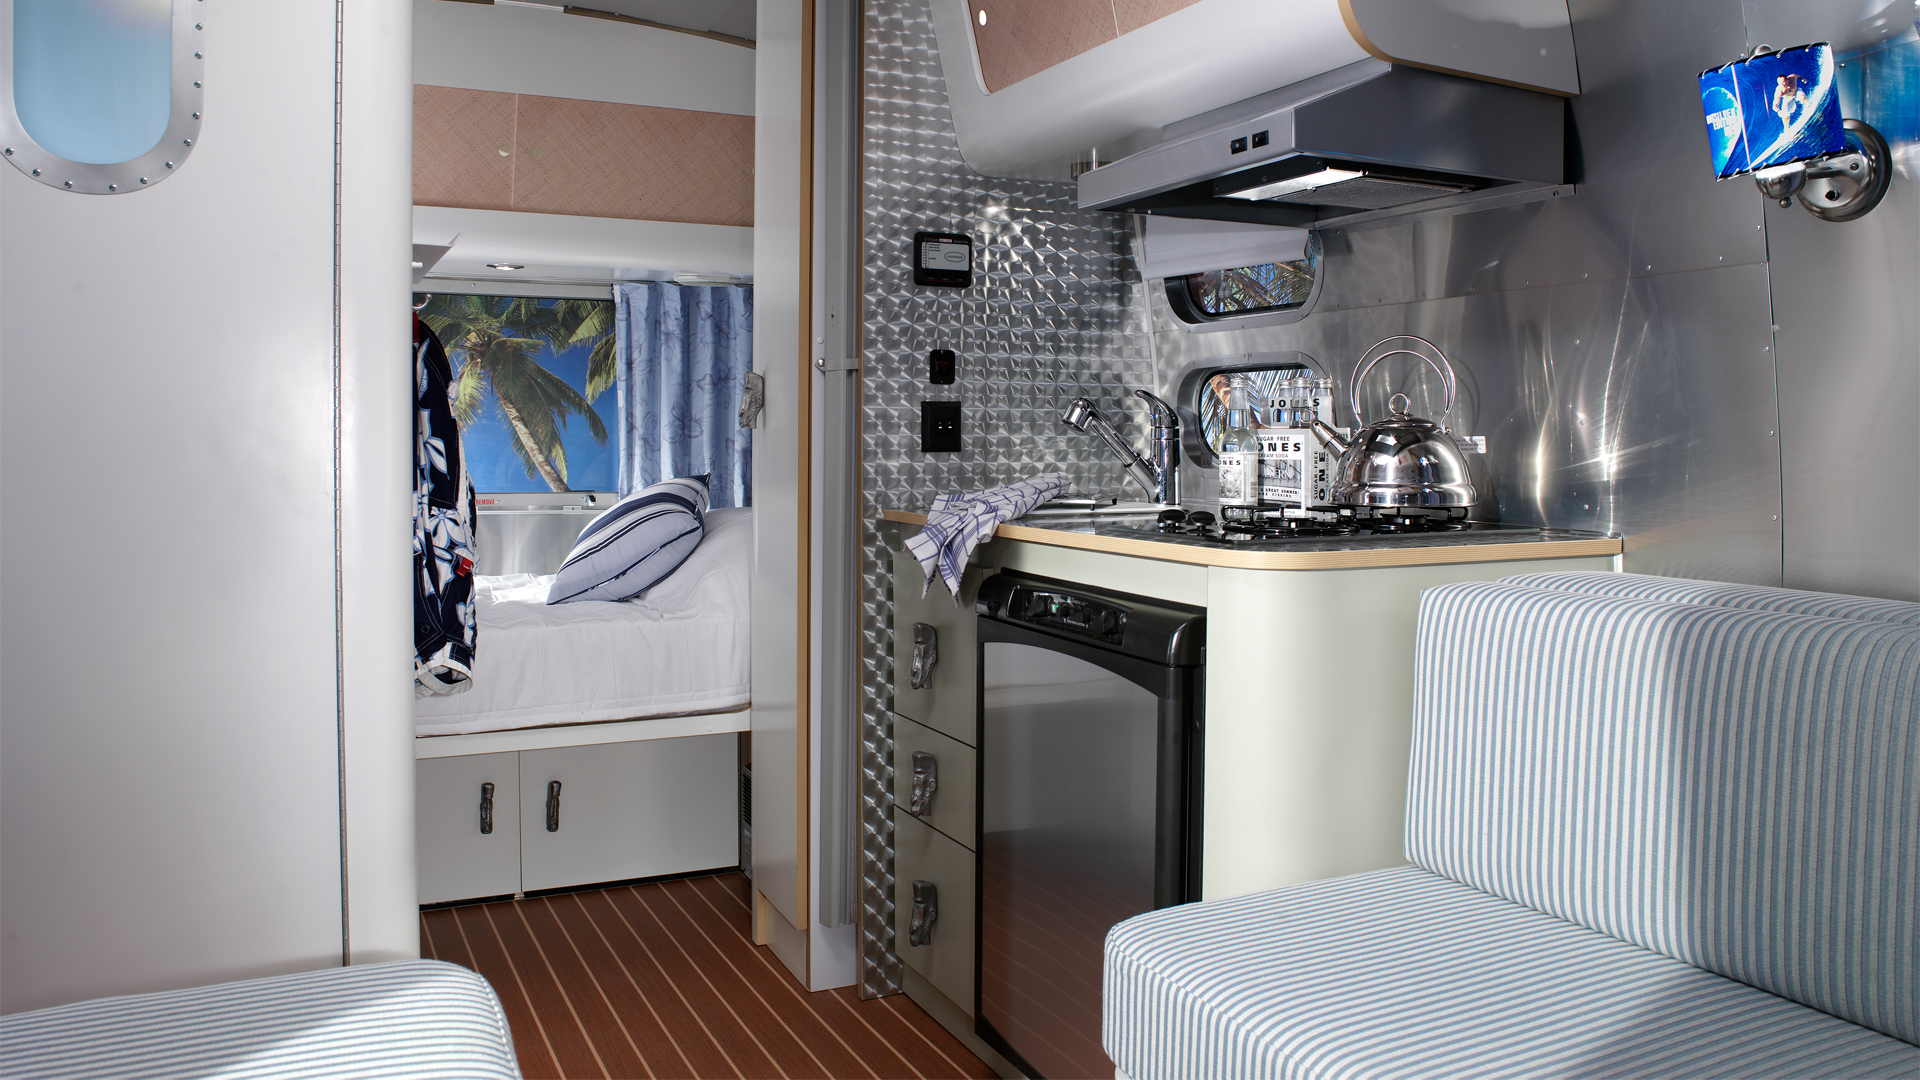 Interior of the Airstream Quick Silver Travel Trailer